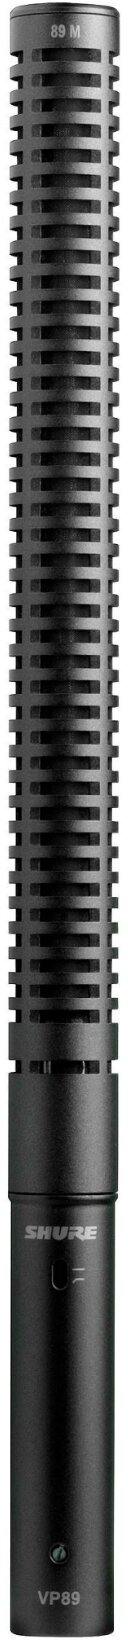 Shure VP89M, разъем: XLR 5 pin (M), черный - фото №7